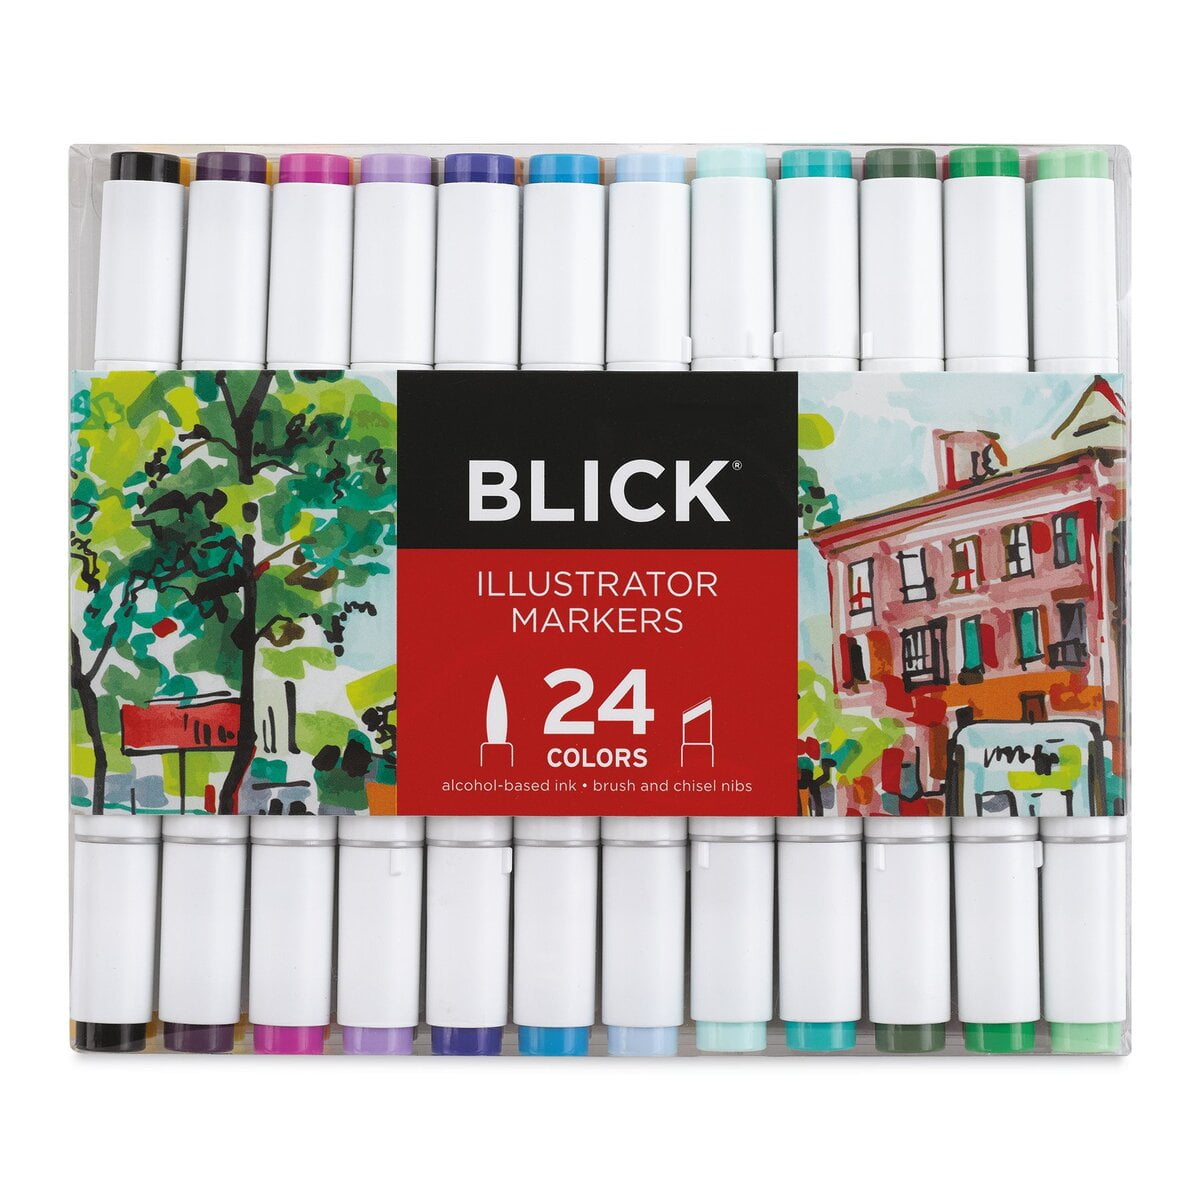 Blick Illustrator Markers - Set of 24 